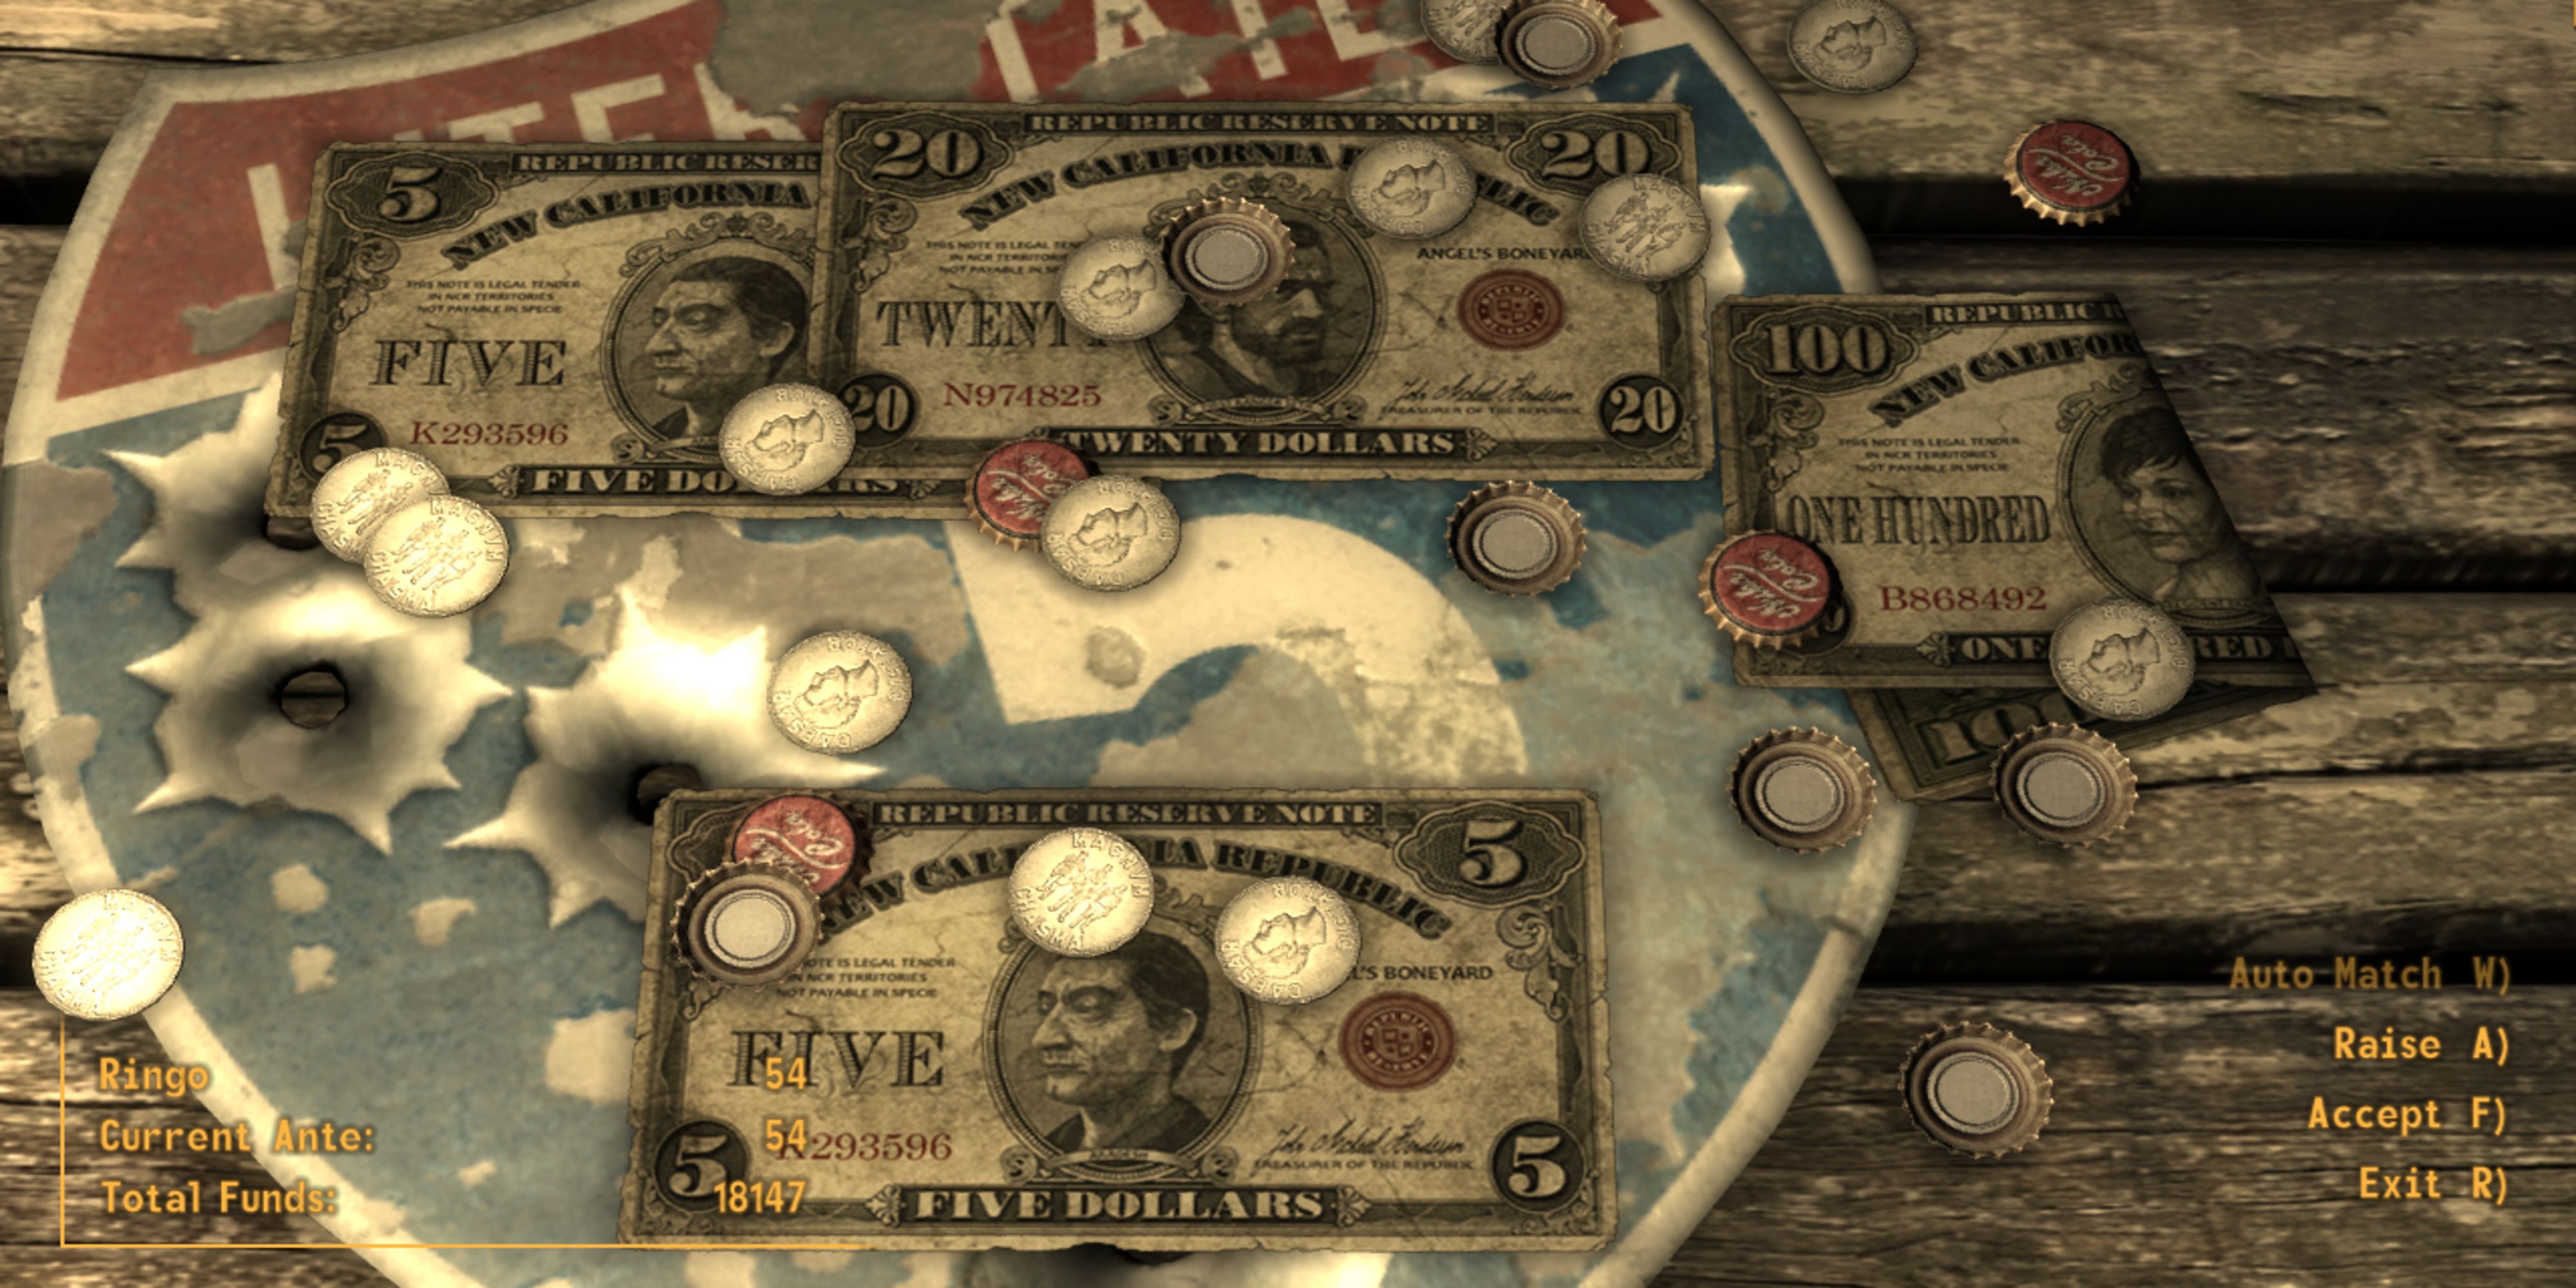 Matching Ringo's bid of 54 caps while playing Caravan in Fallout: New Vegas.